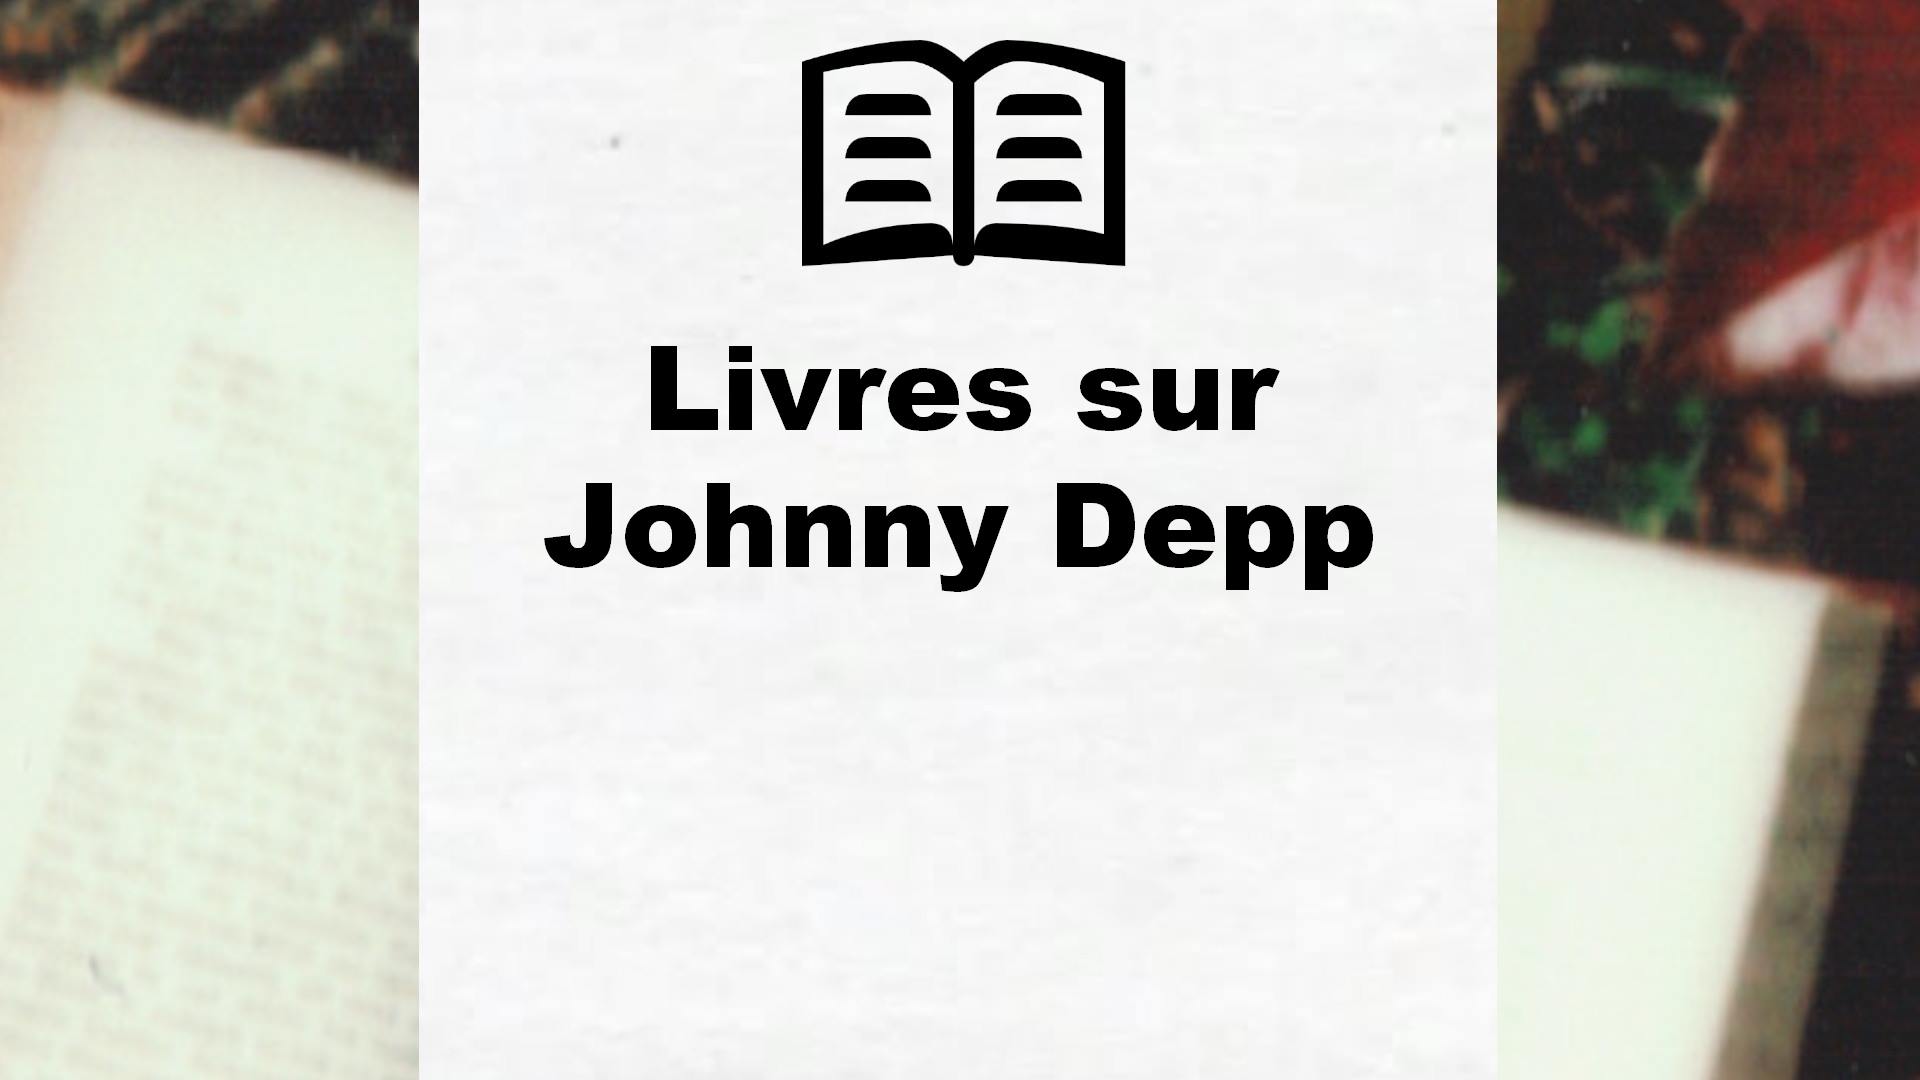 Livres sur Johnny Depp